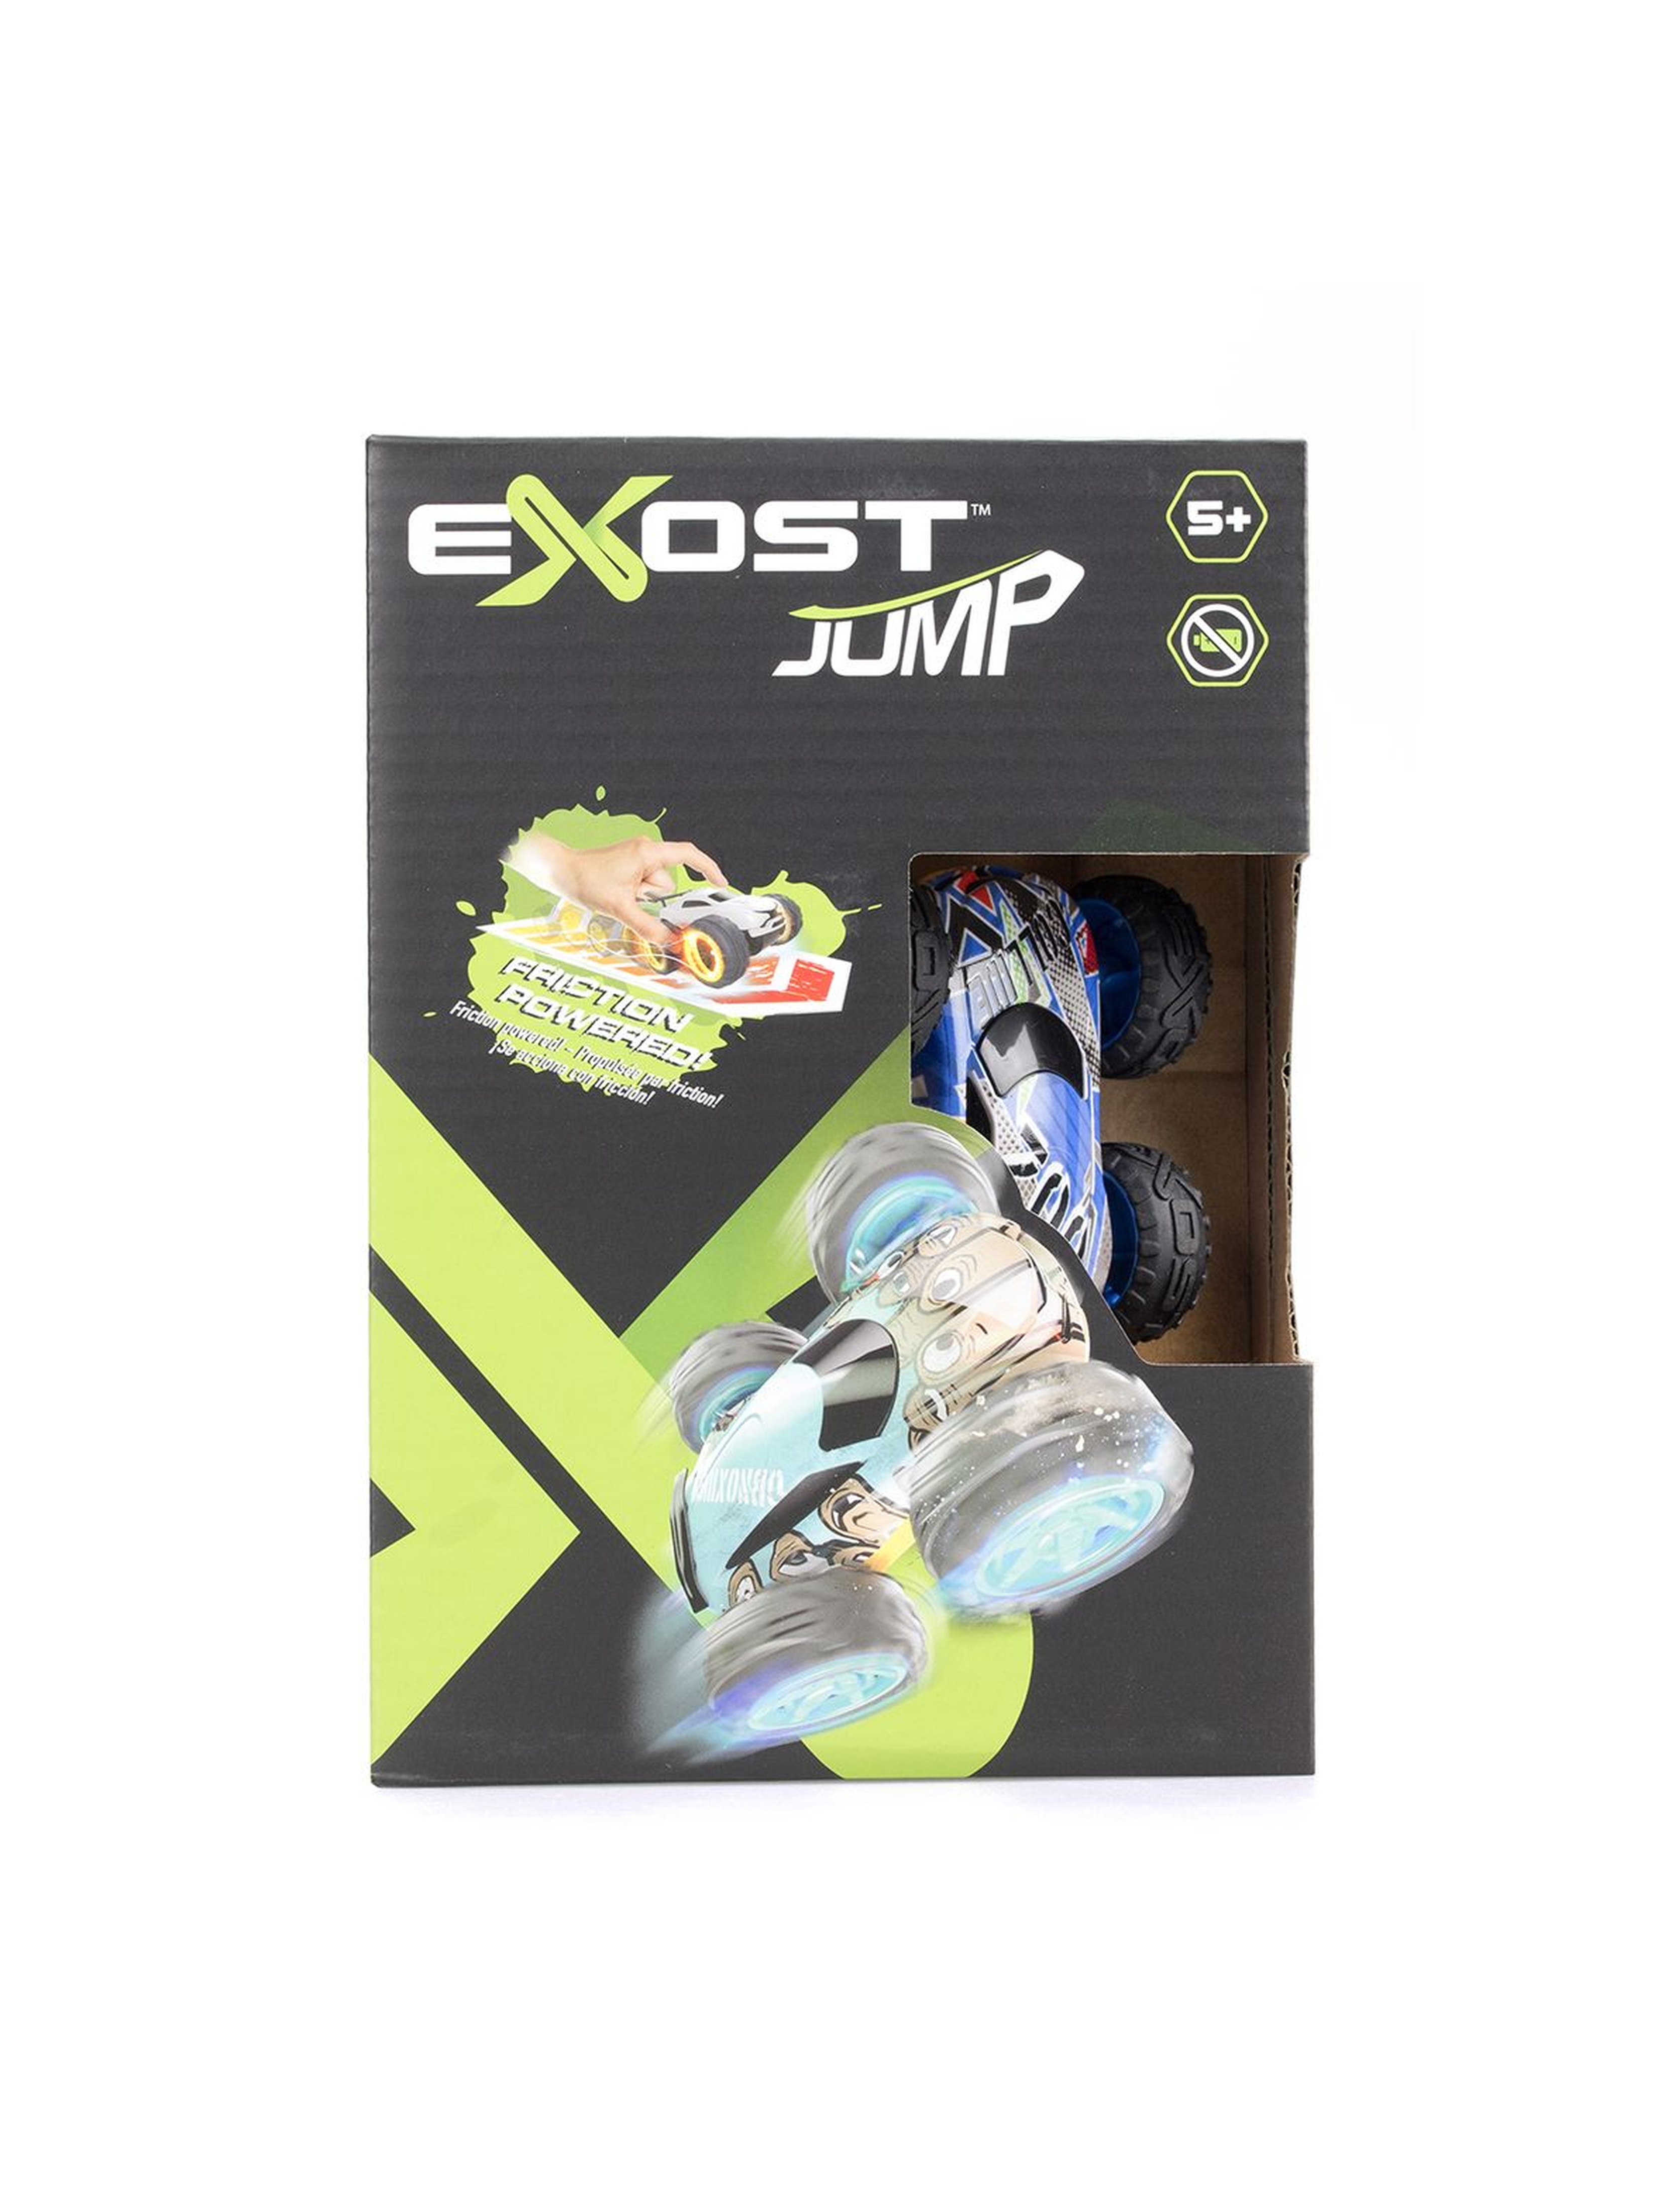 Exost jump - flip 2 - wiek 5+